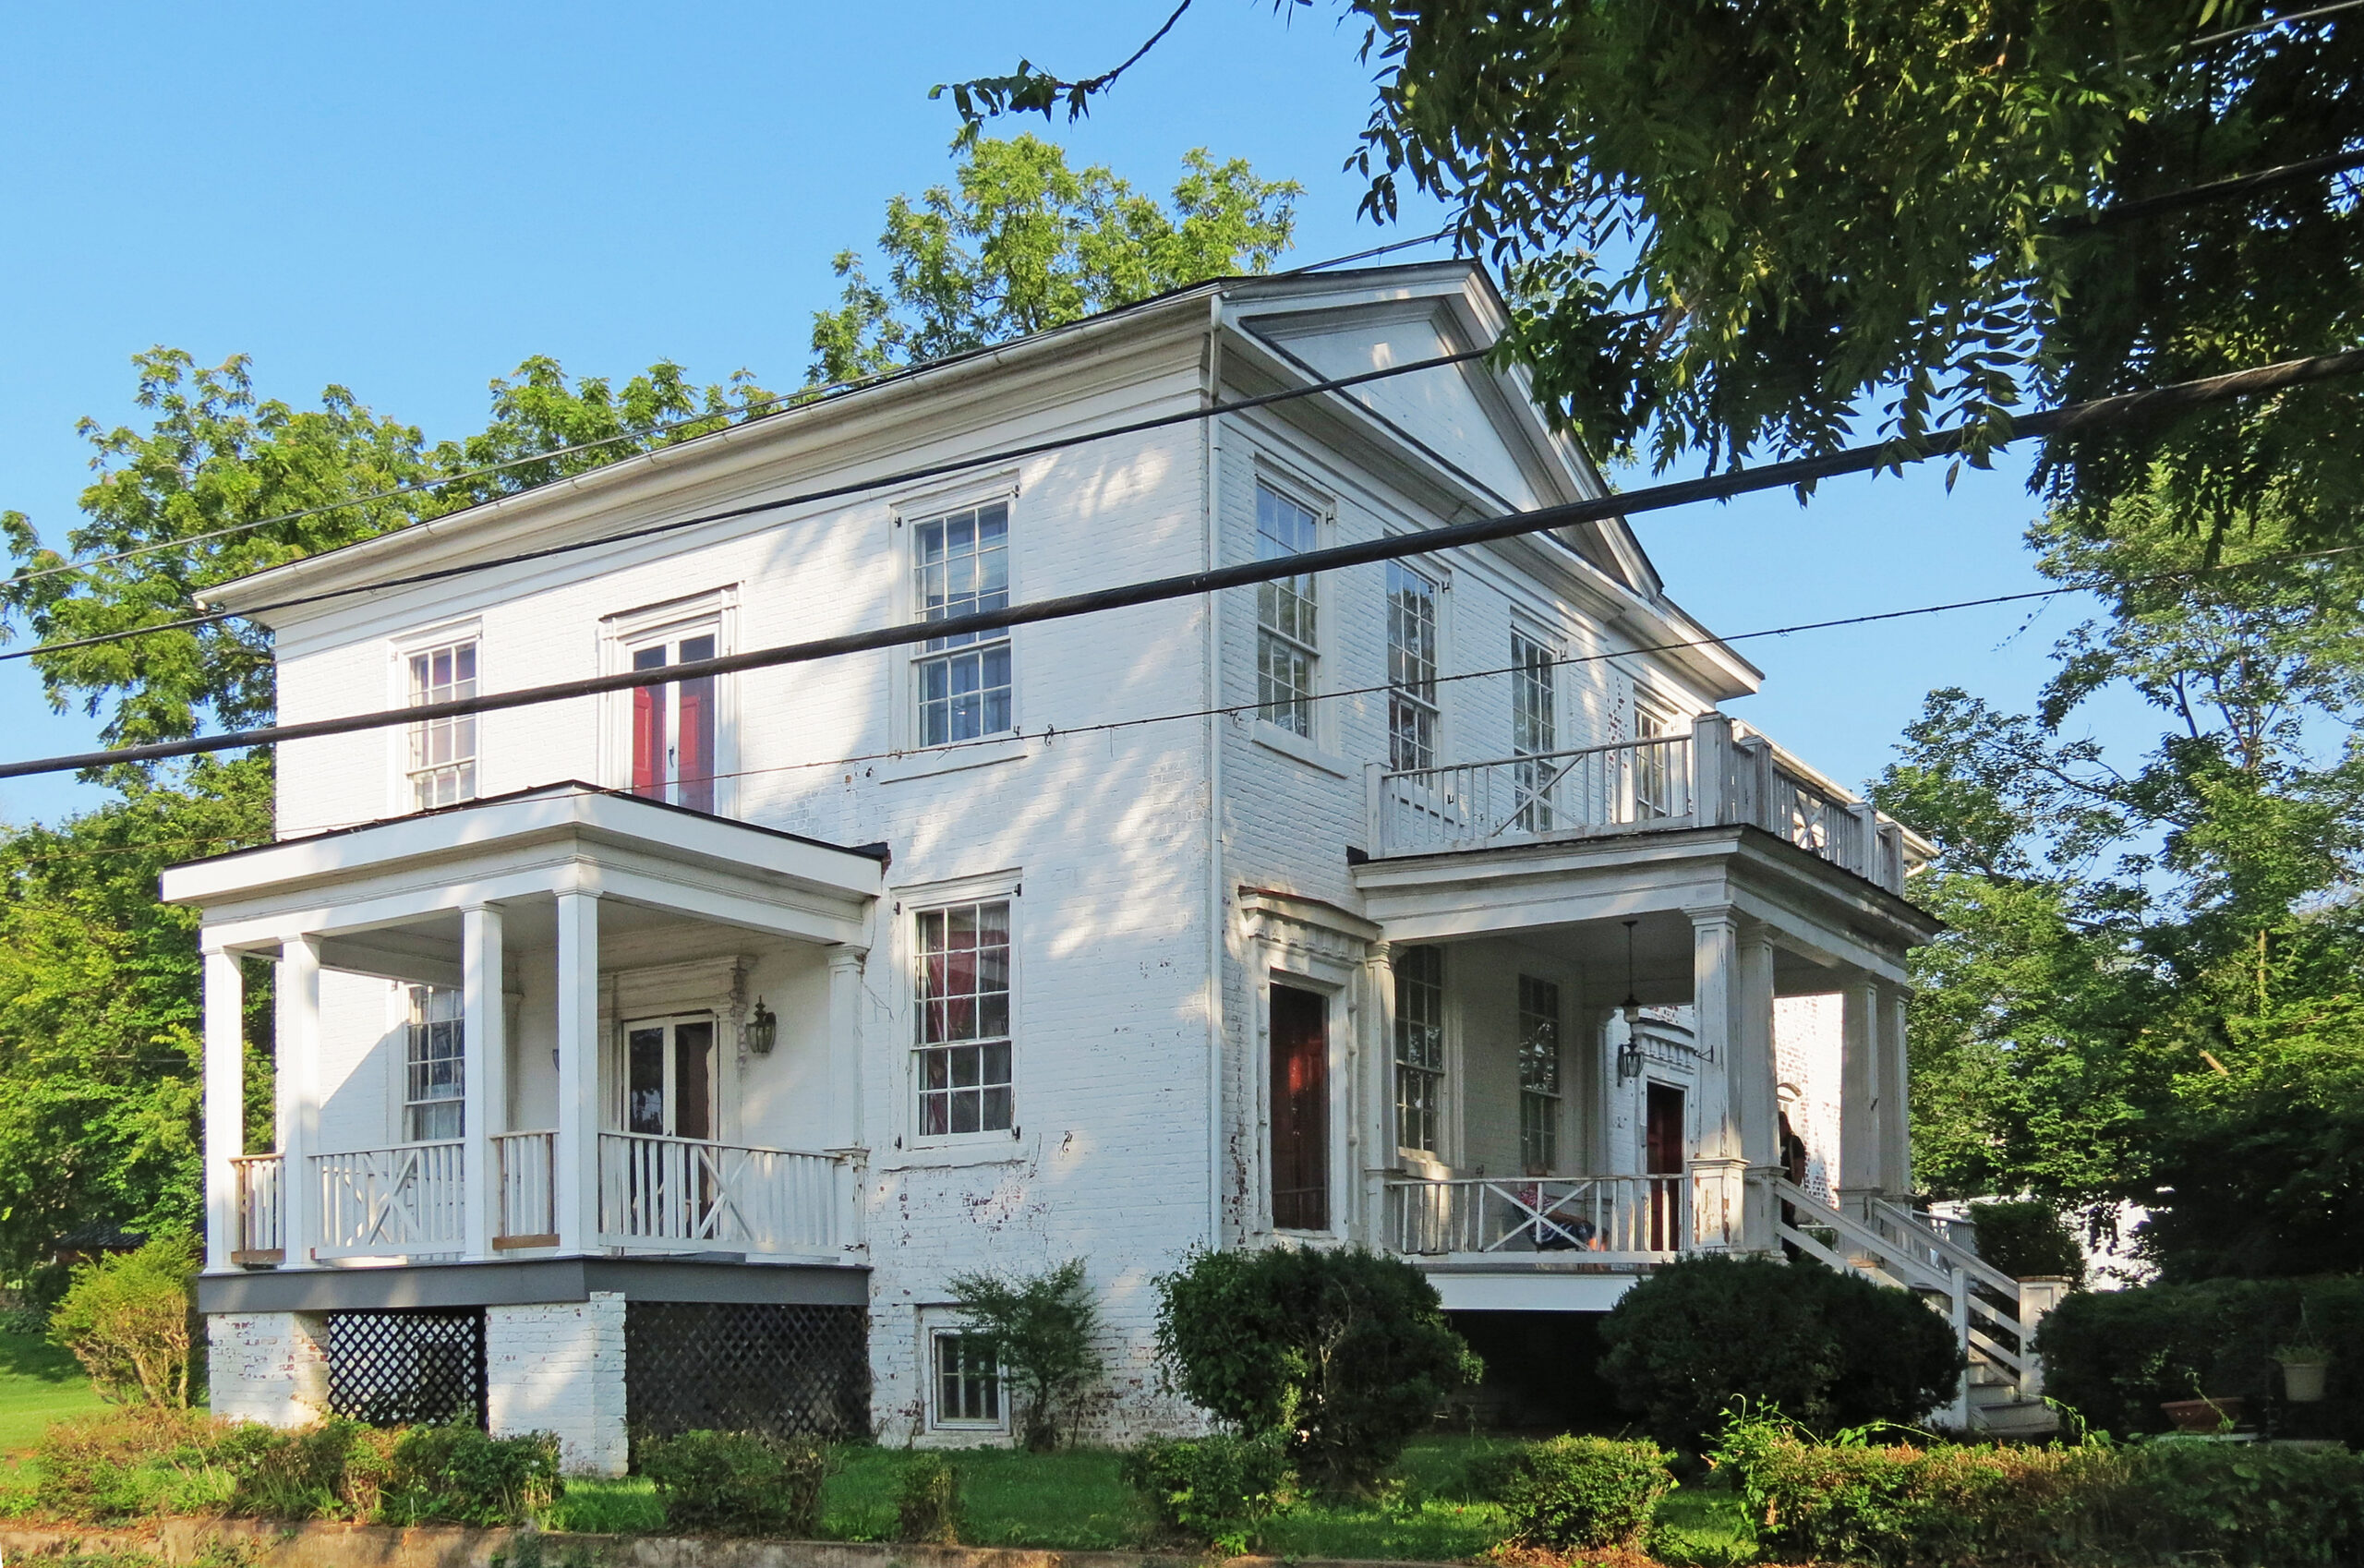 Ballad-Marshall Historic Home